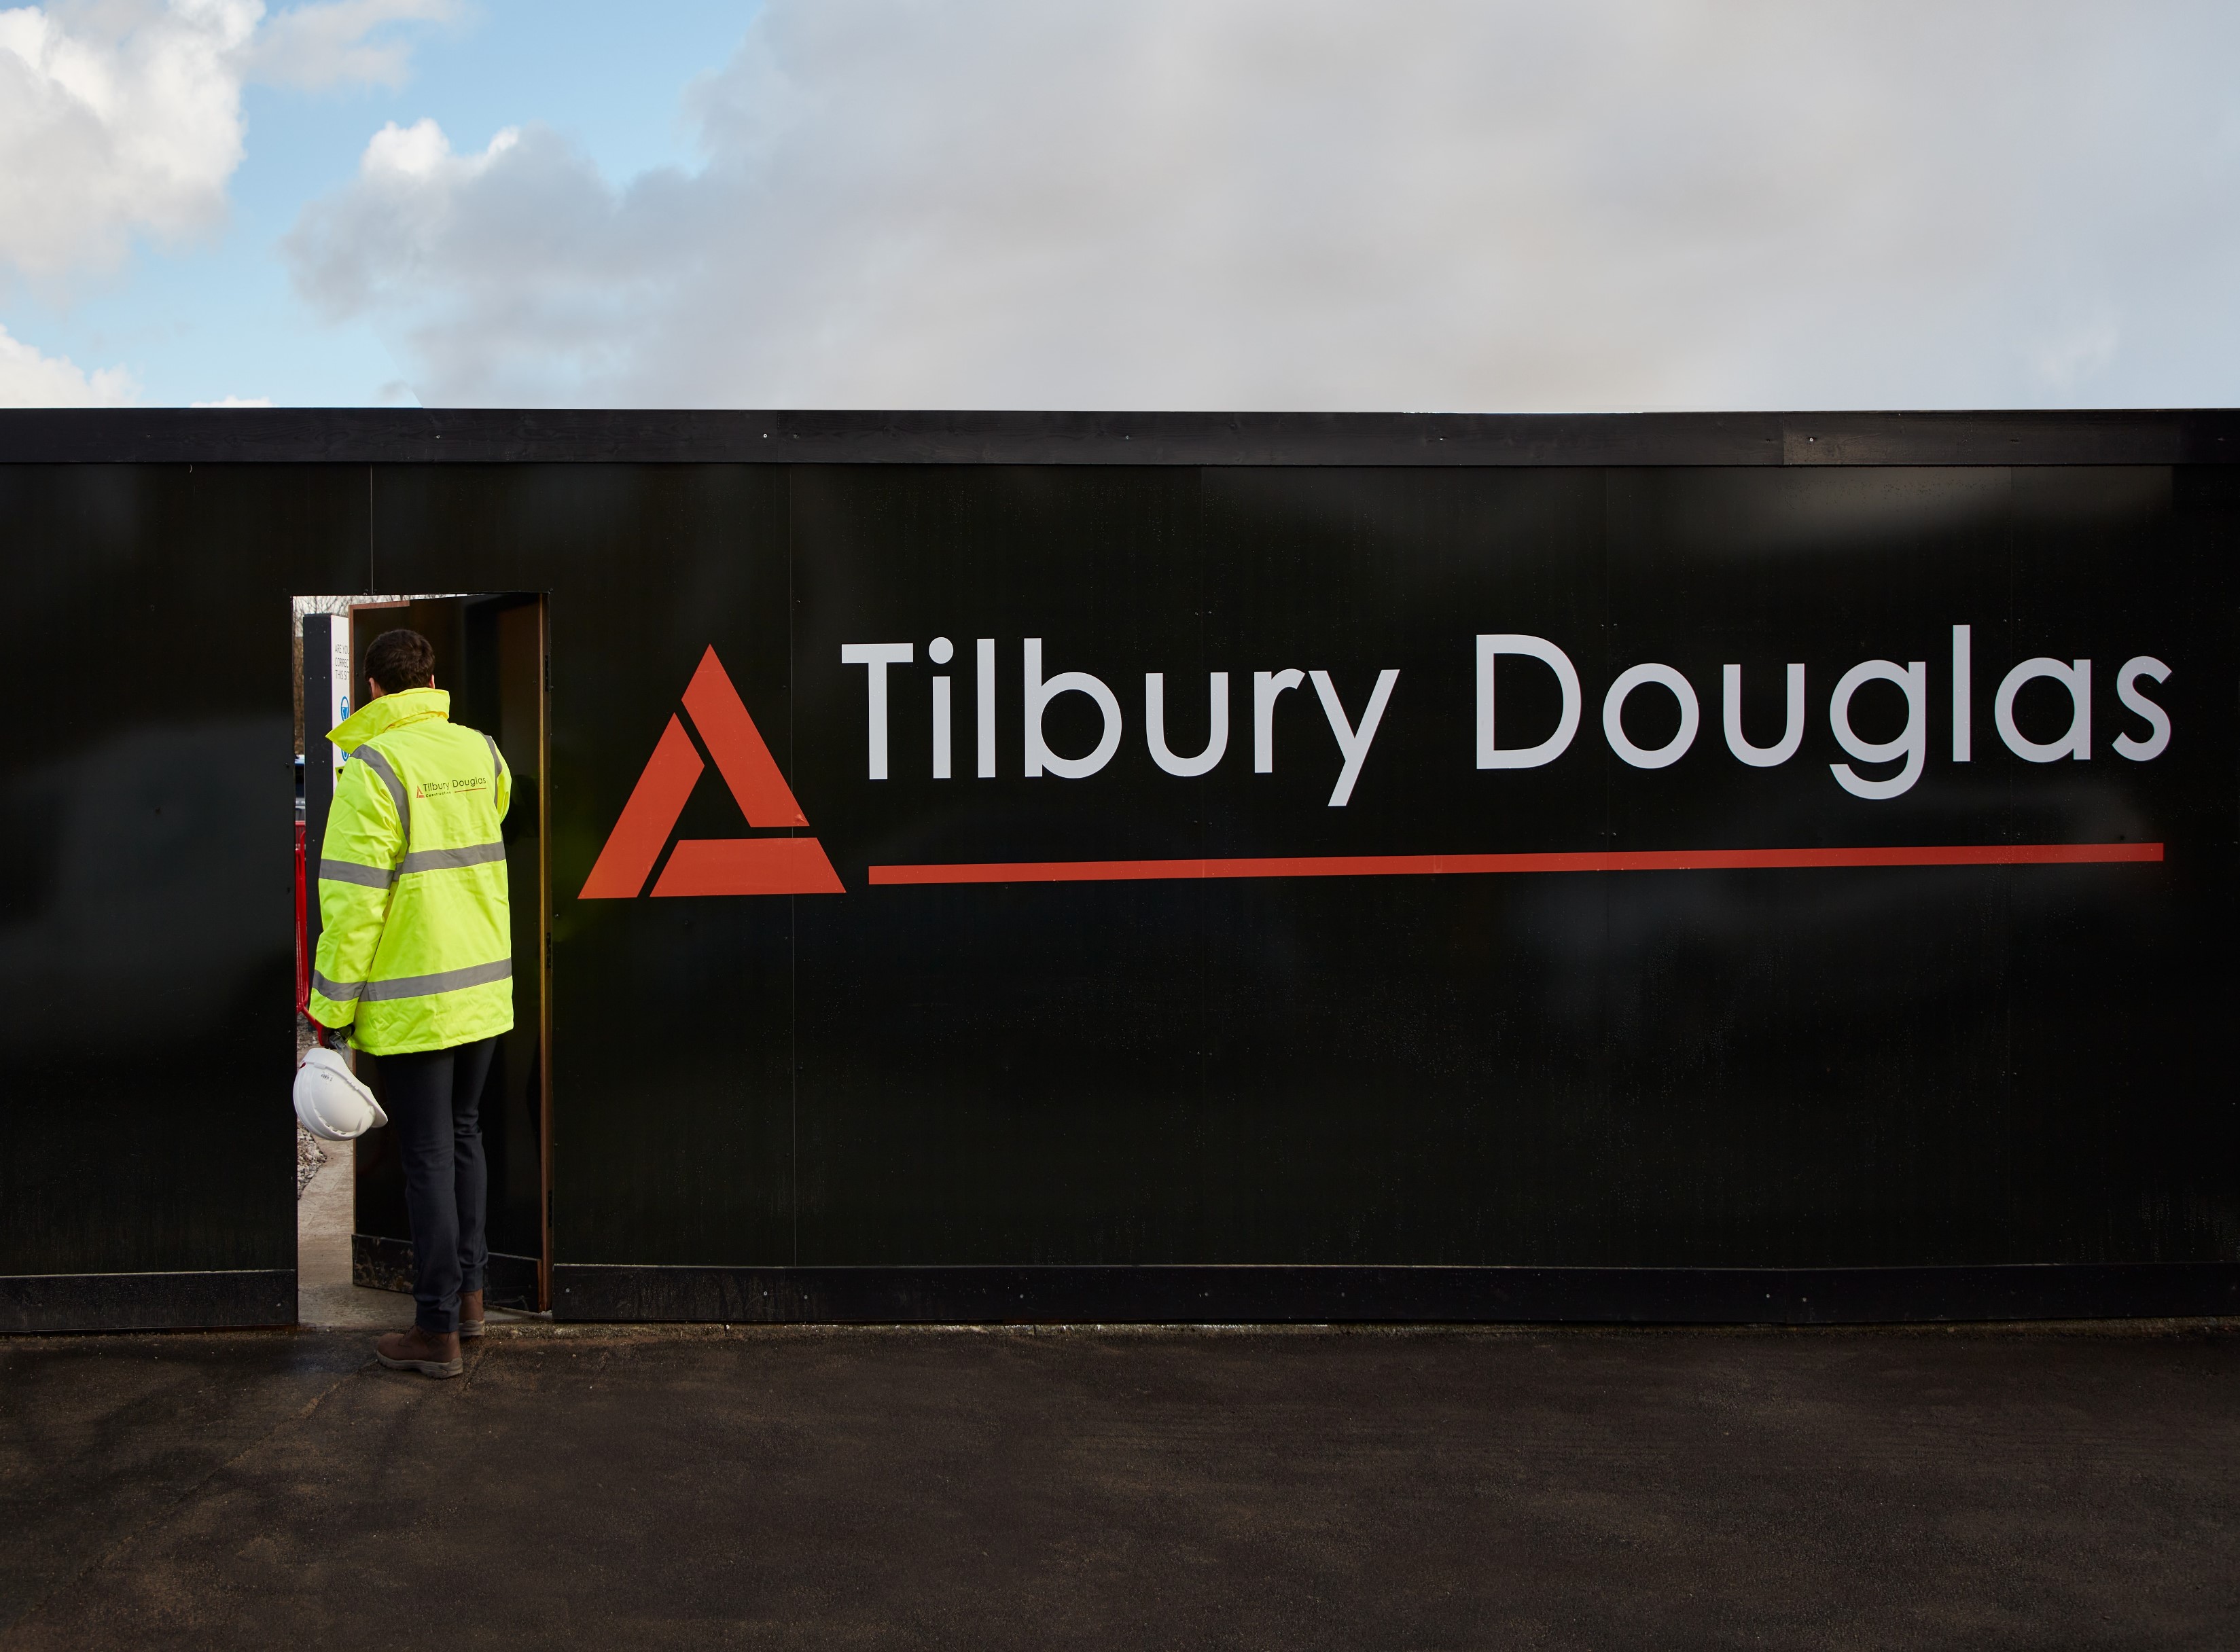 Laporan mengatakan Kier akan membeli Tilbury Douglas